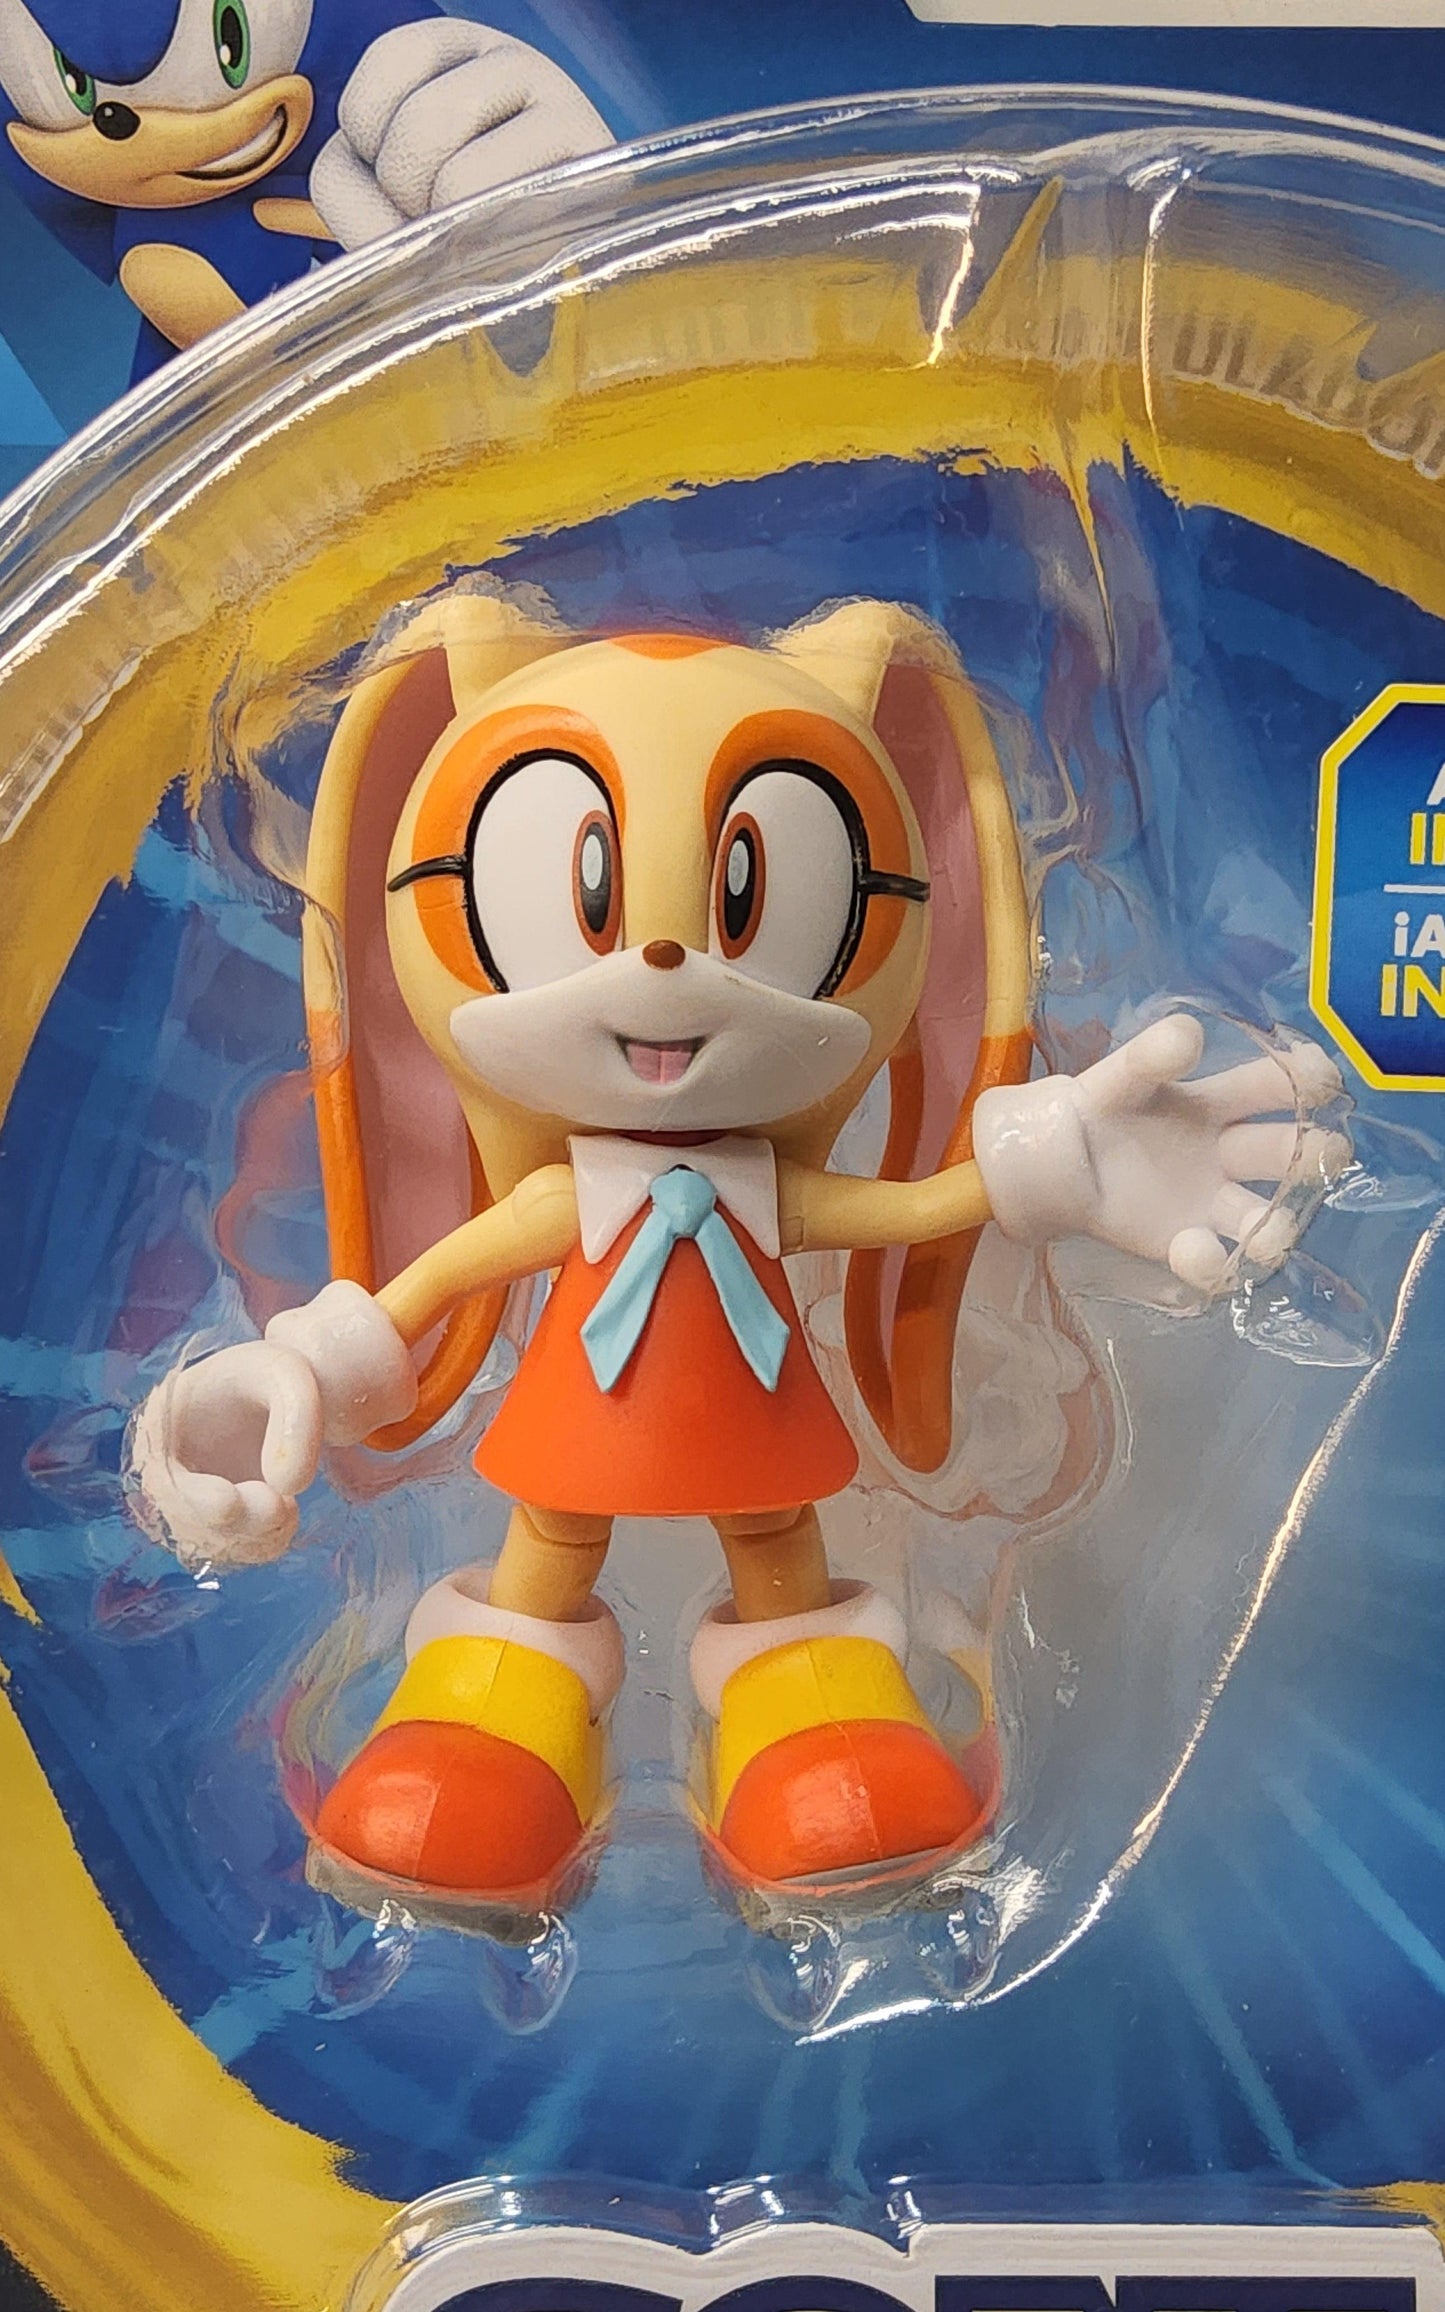 Jakks Pacific Sonic the Hedgehog Cream & Ice Cream Cone 4" Action Figure - Logan's Toy Chest